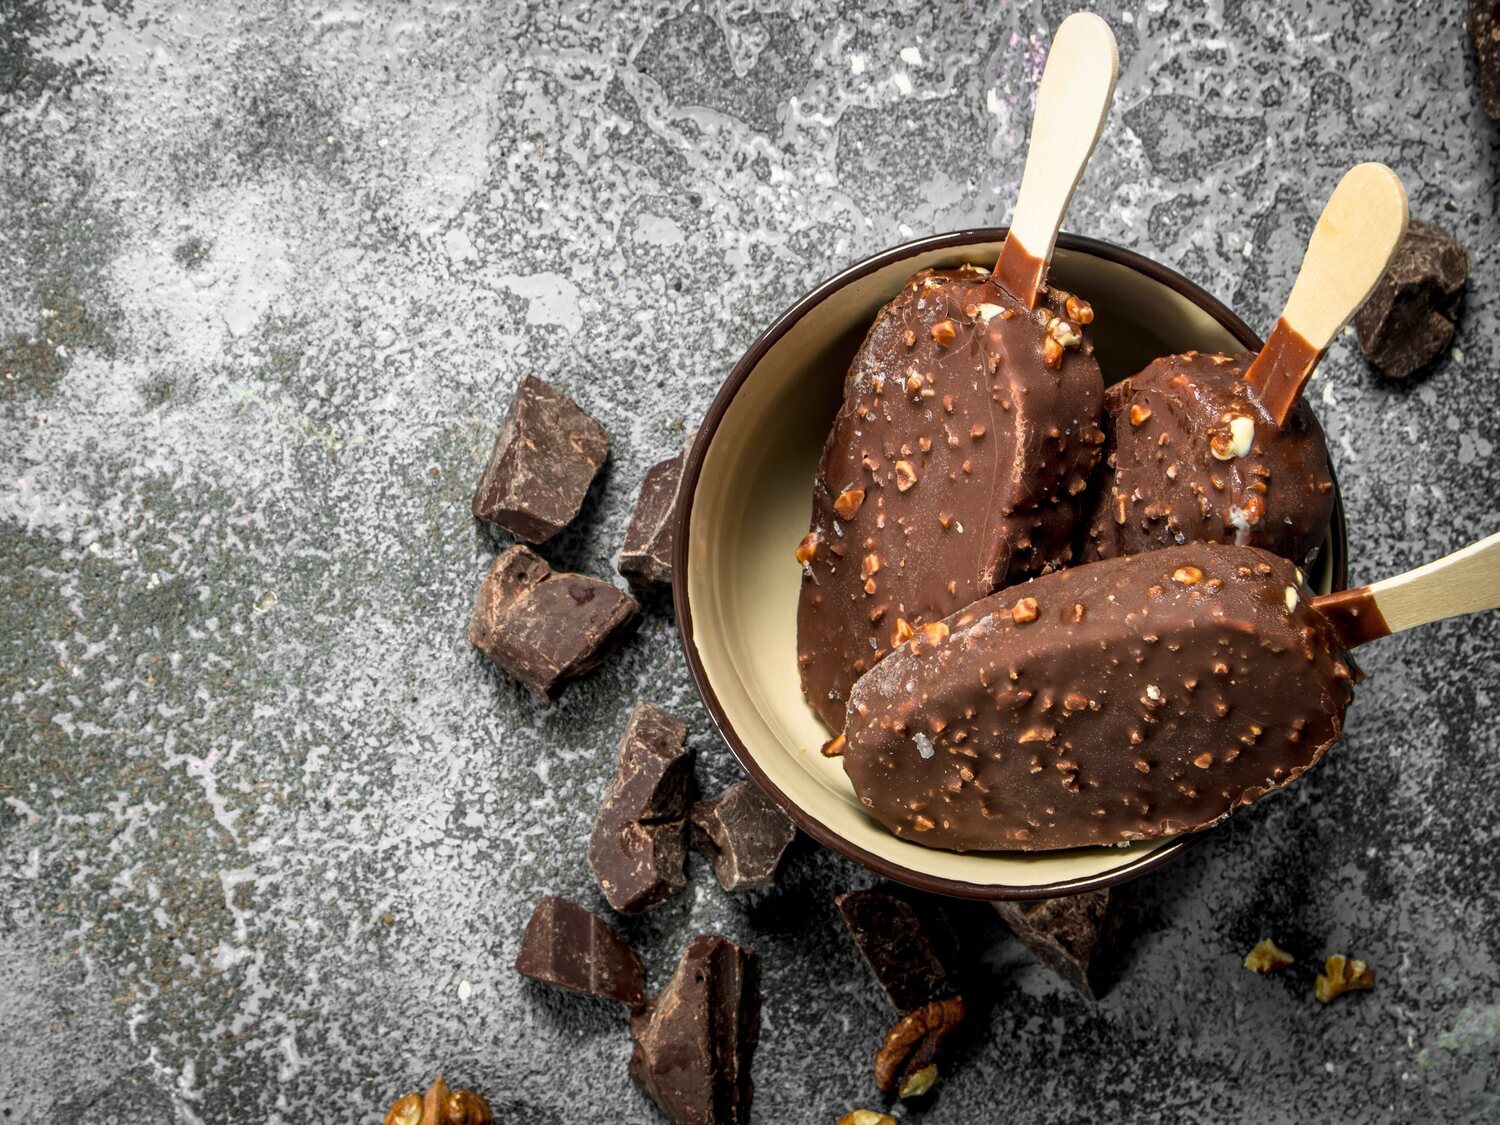 Alerta alimentaria: Nestlé retira 46 variedades de helados contaminados con óxido de etileno